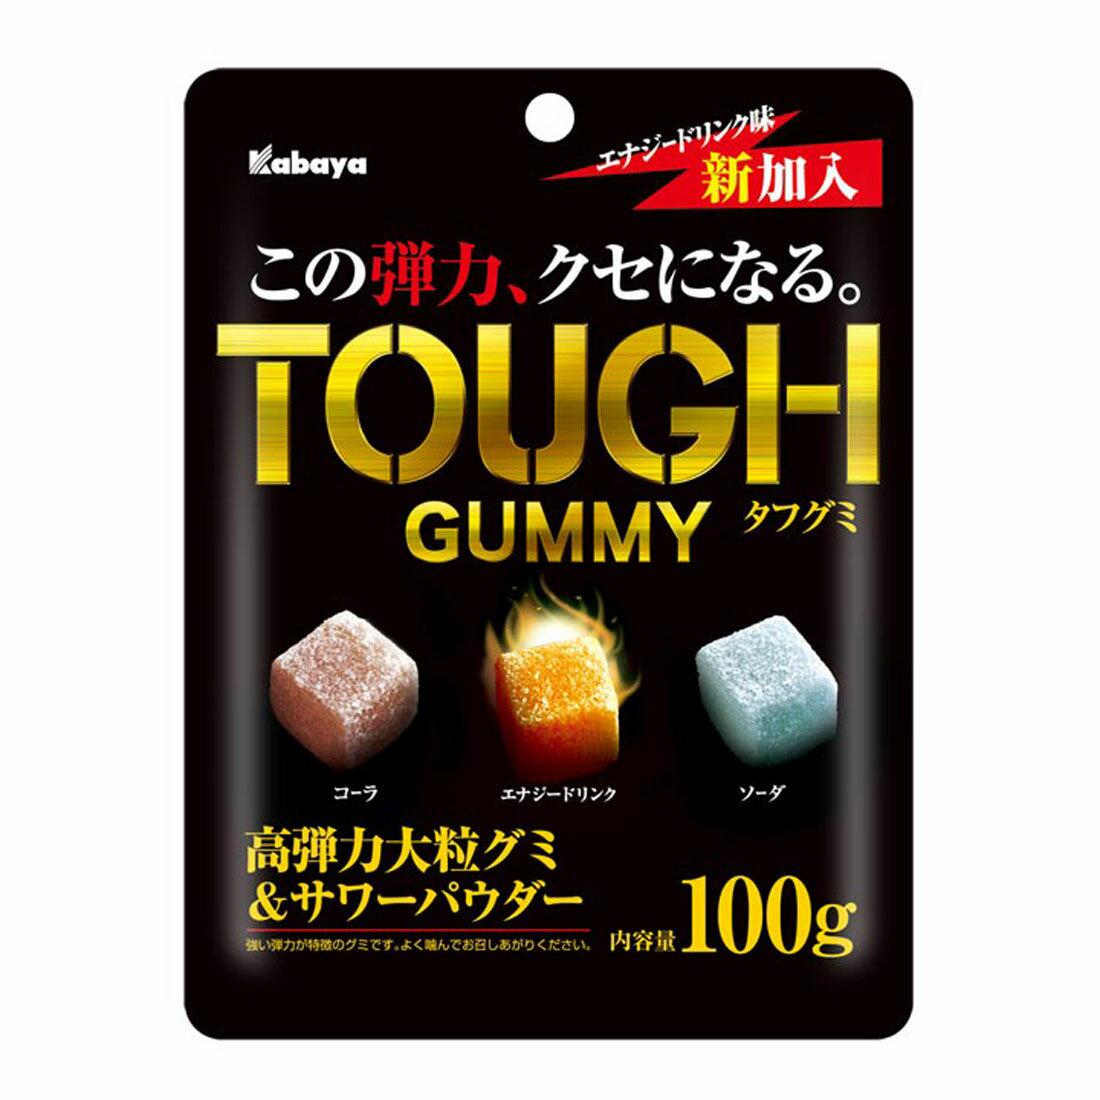 Kabaya Tough Gummy Mixed Flavor Gummies 100g